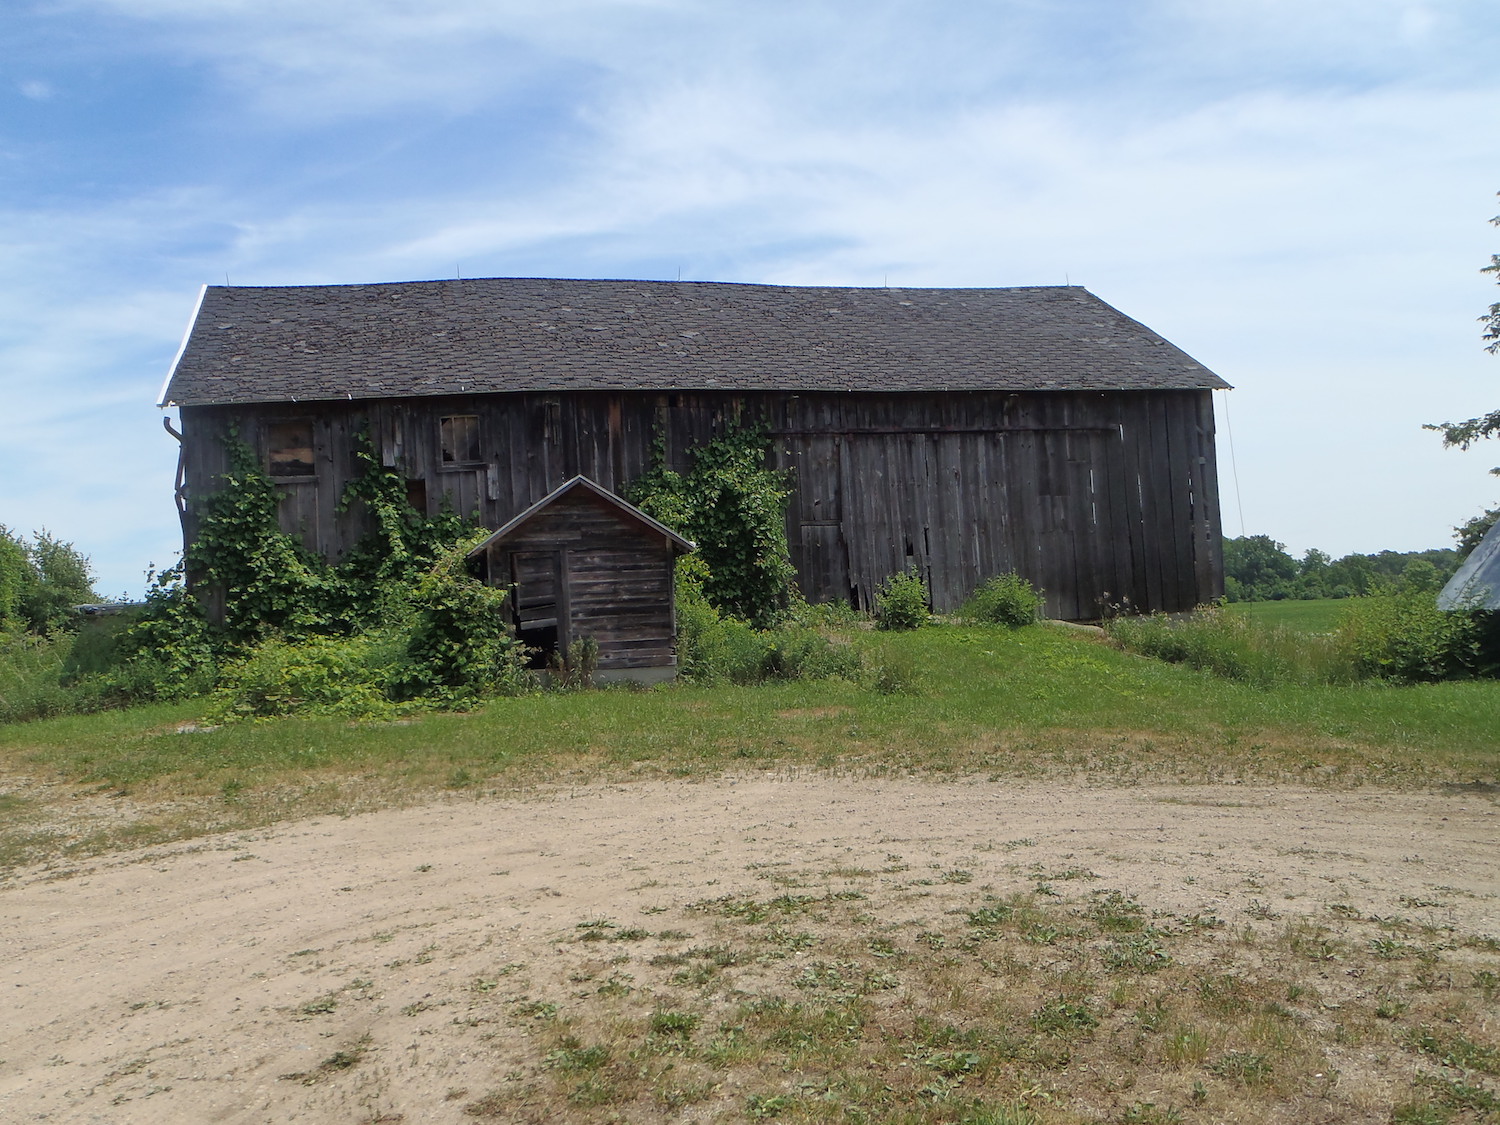 A dark barn in the countryside